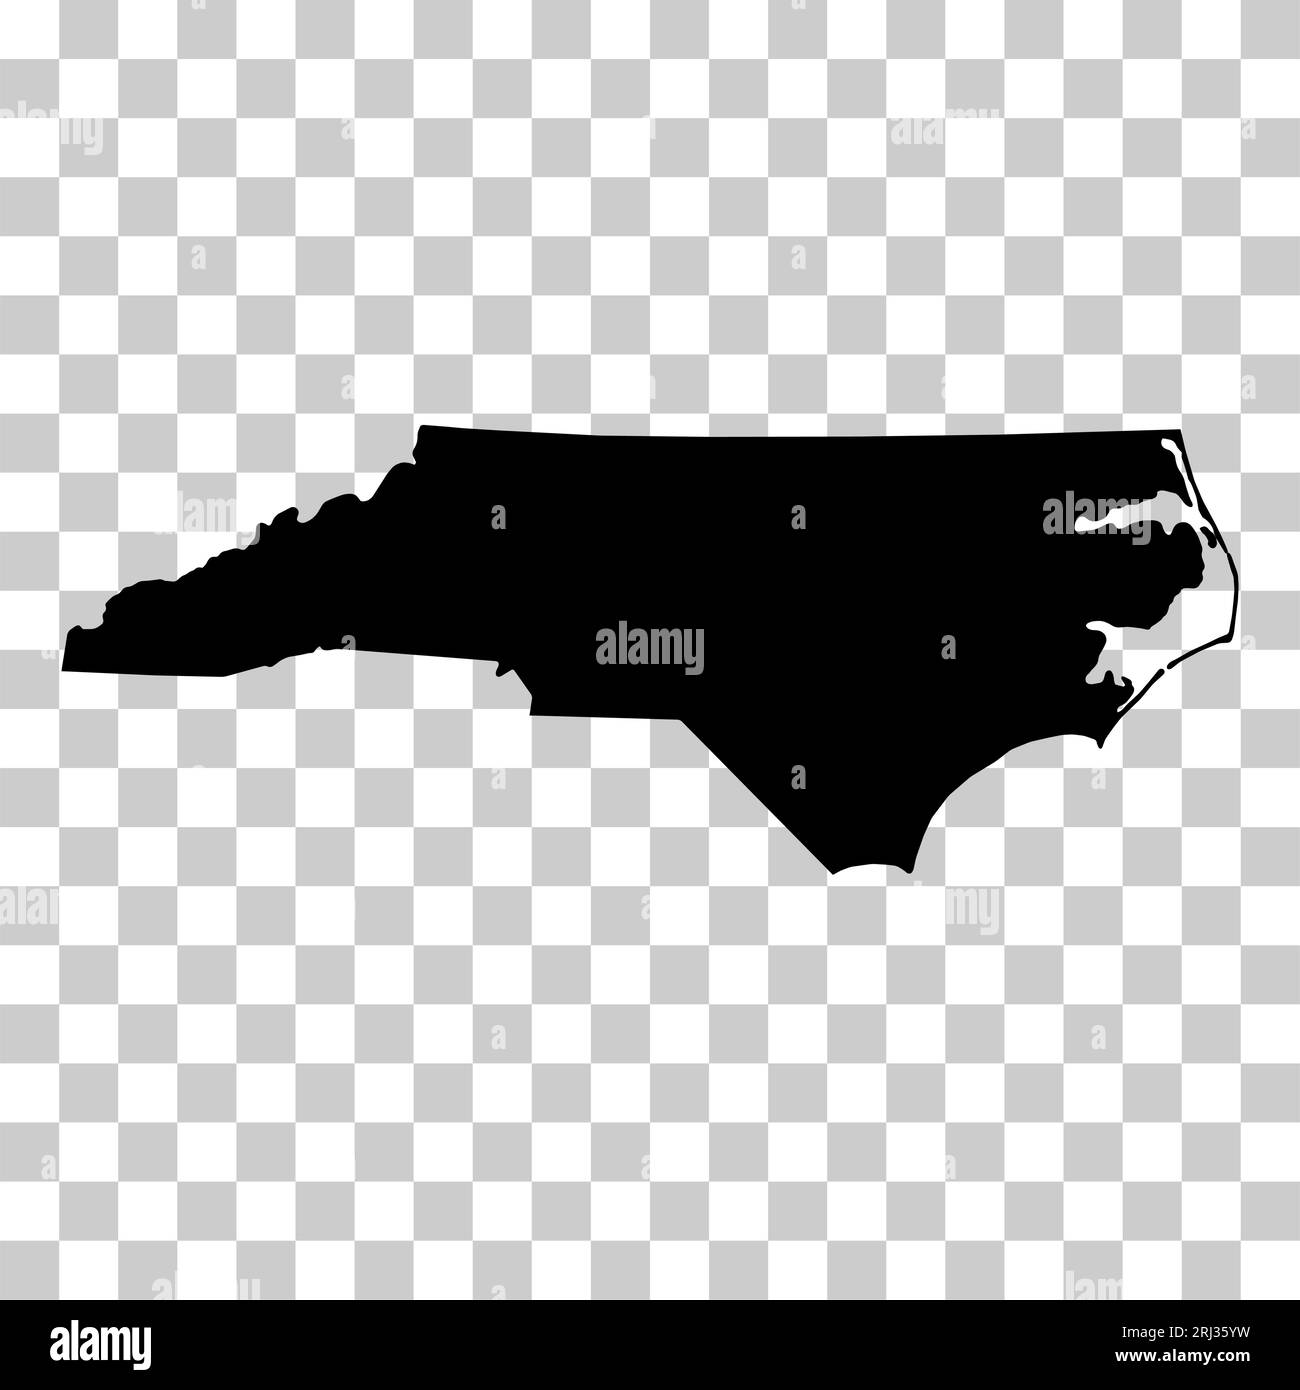 North Carolina map shape, united states of america. Flat concept